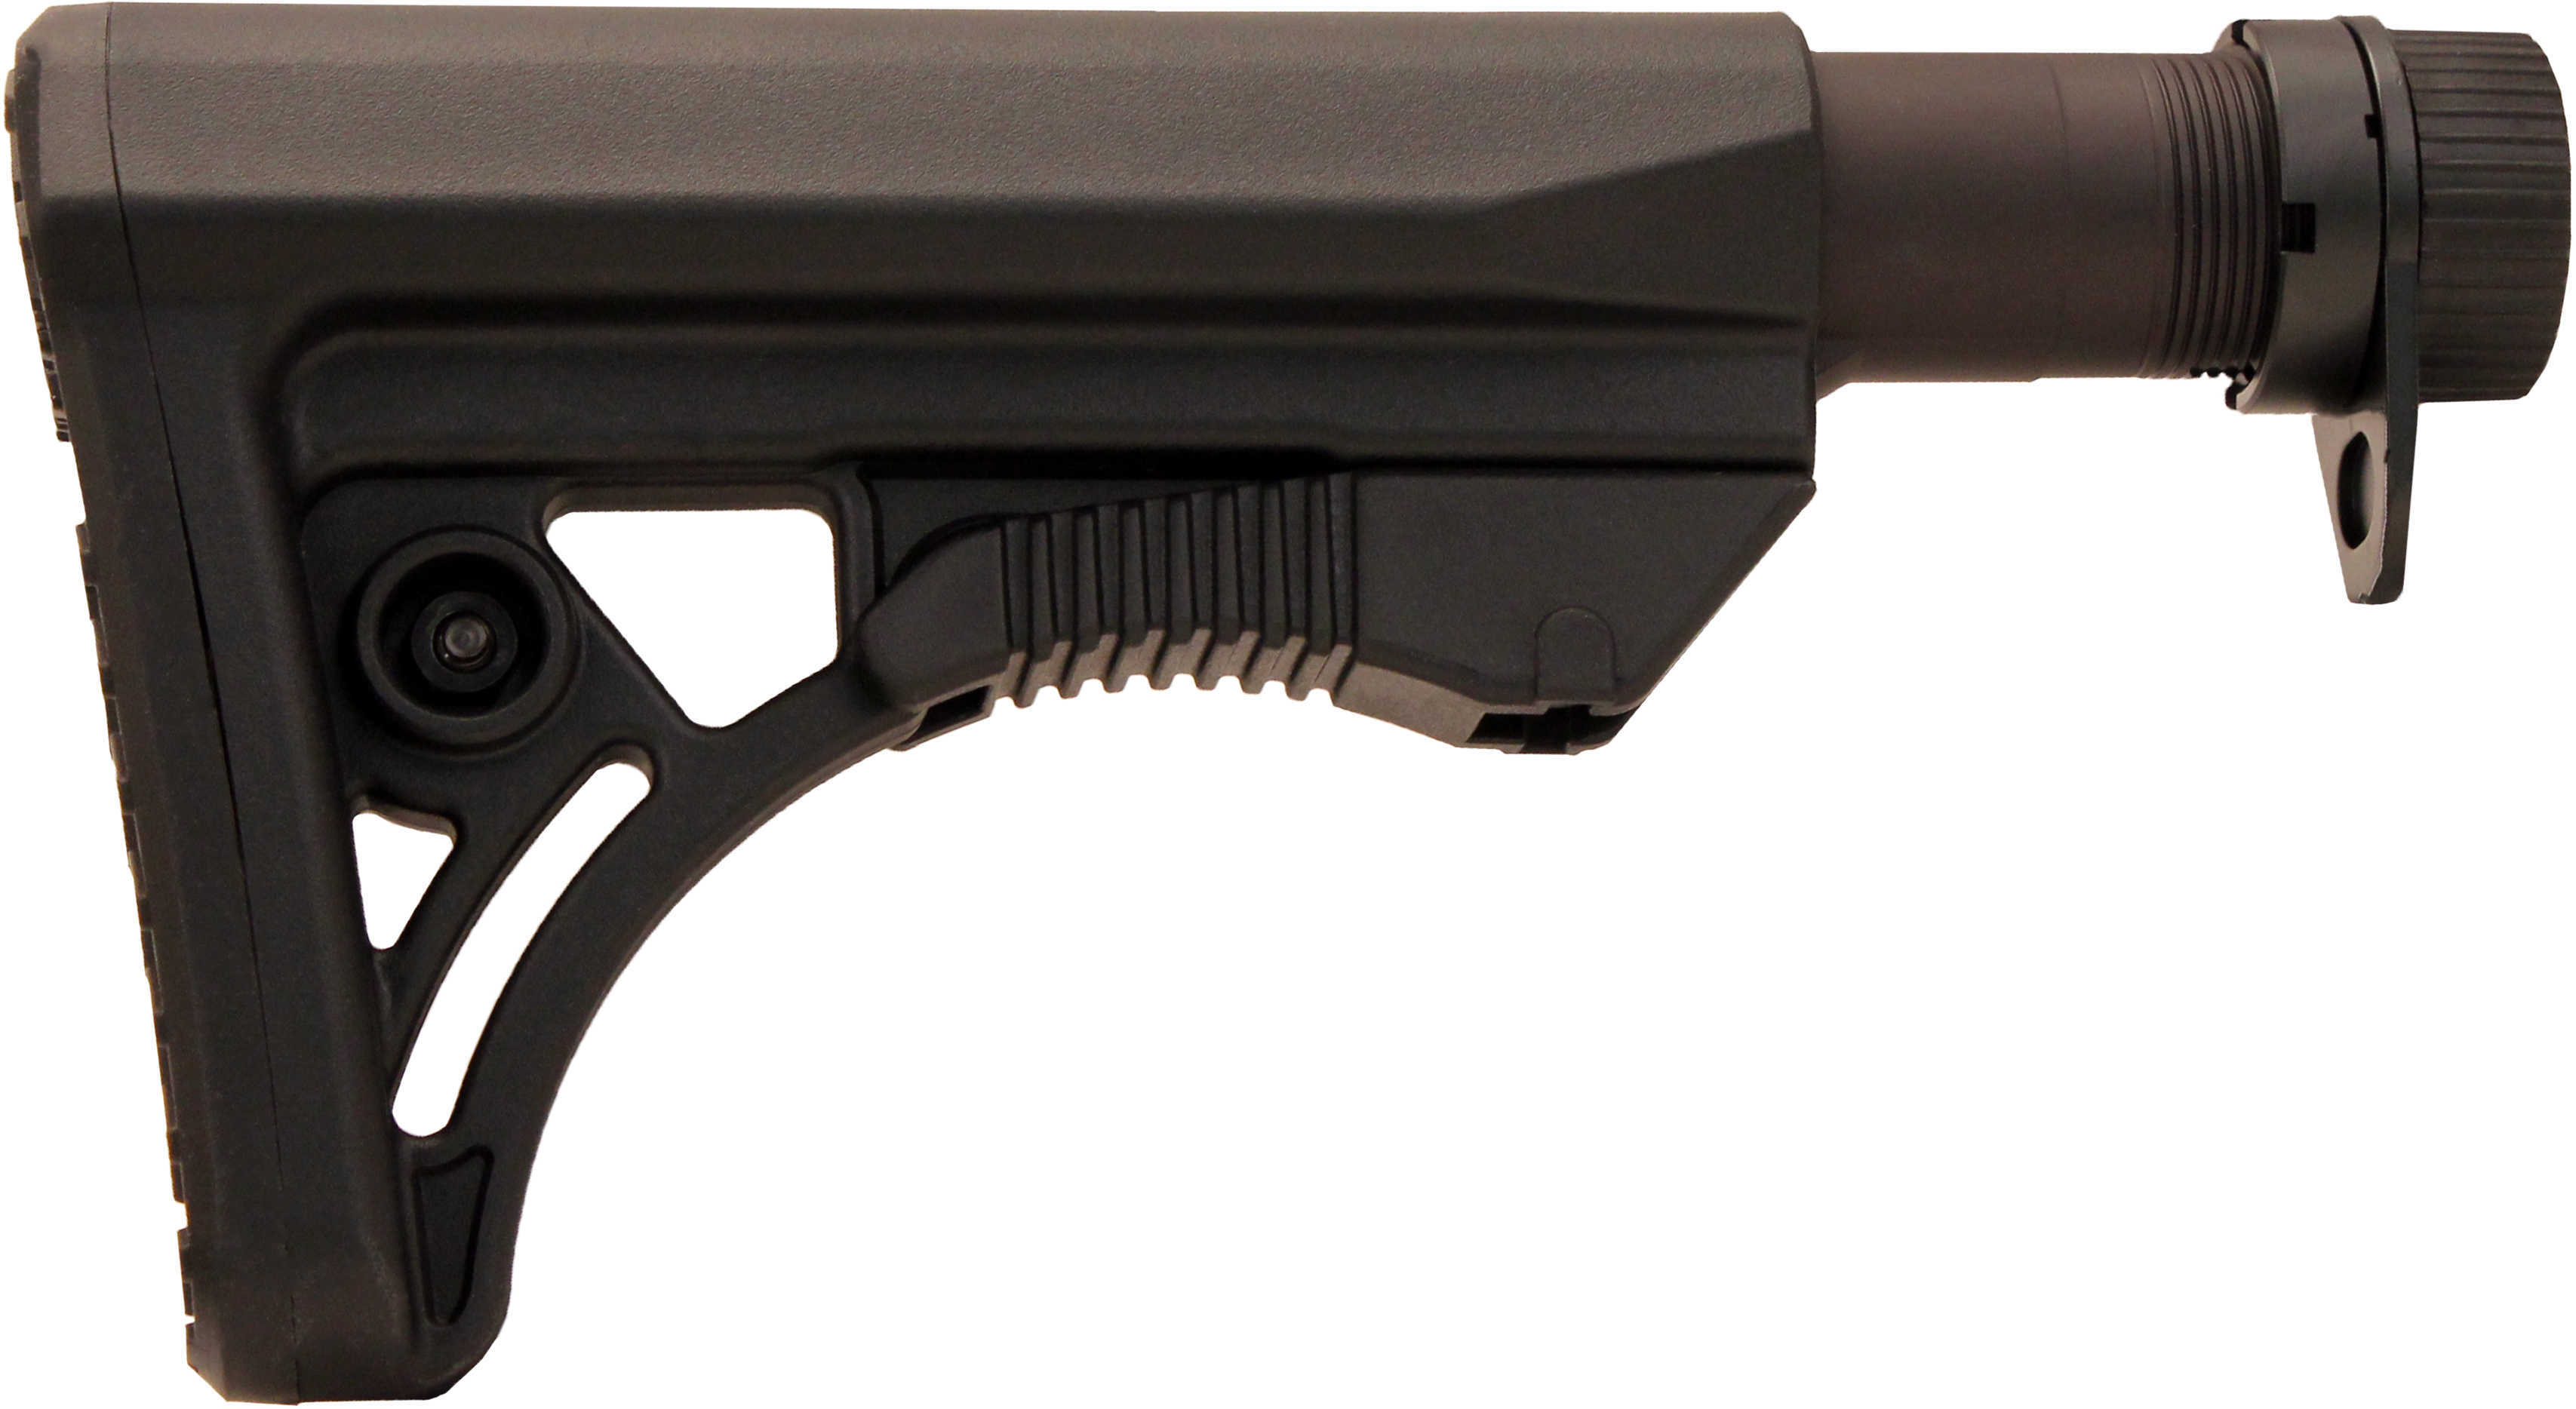 UTG Pro RBUS3Bm Mil-Spec S3 AR15/M16 Rifle Buttstock Kit Aluminum/Polymer Black